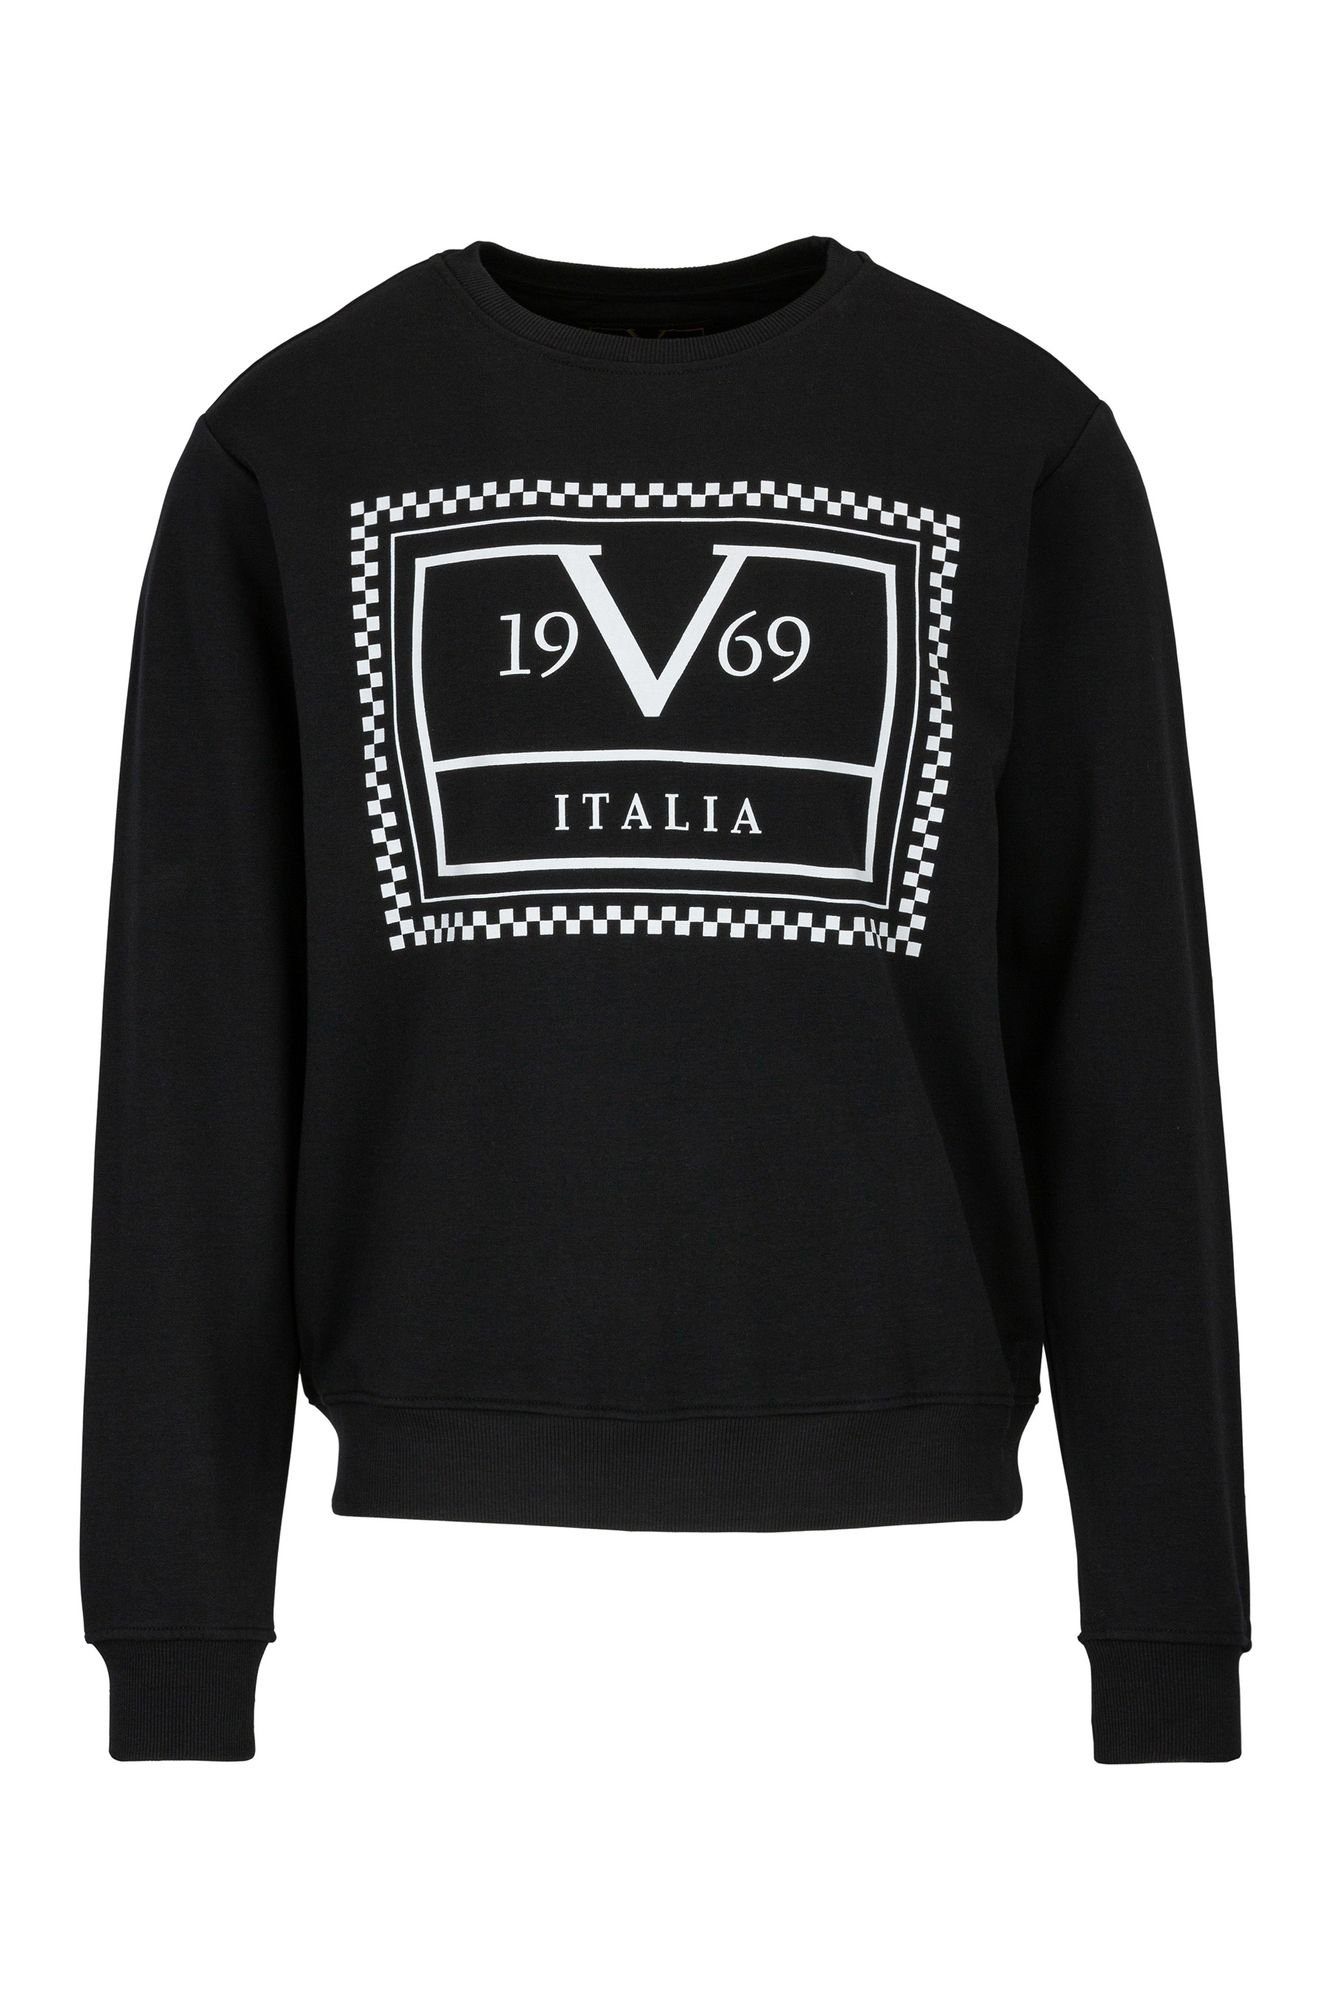 by Lorenzo 19V69 Sweatshirt Italia Versace